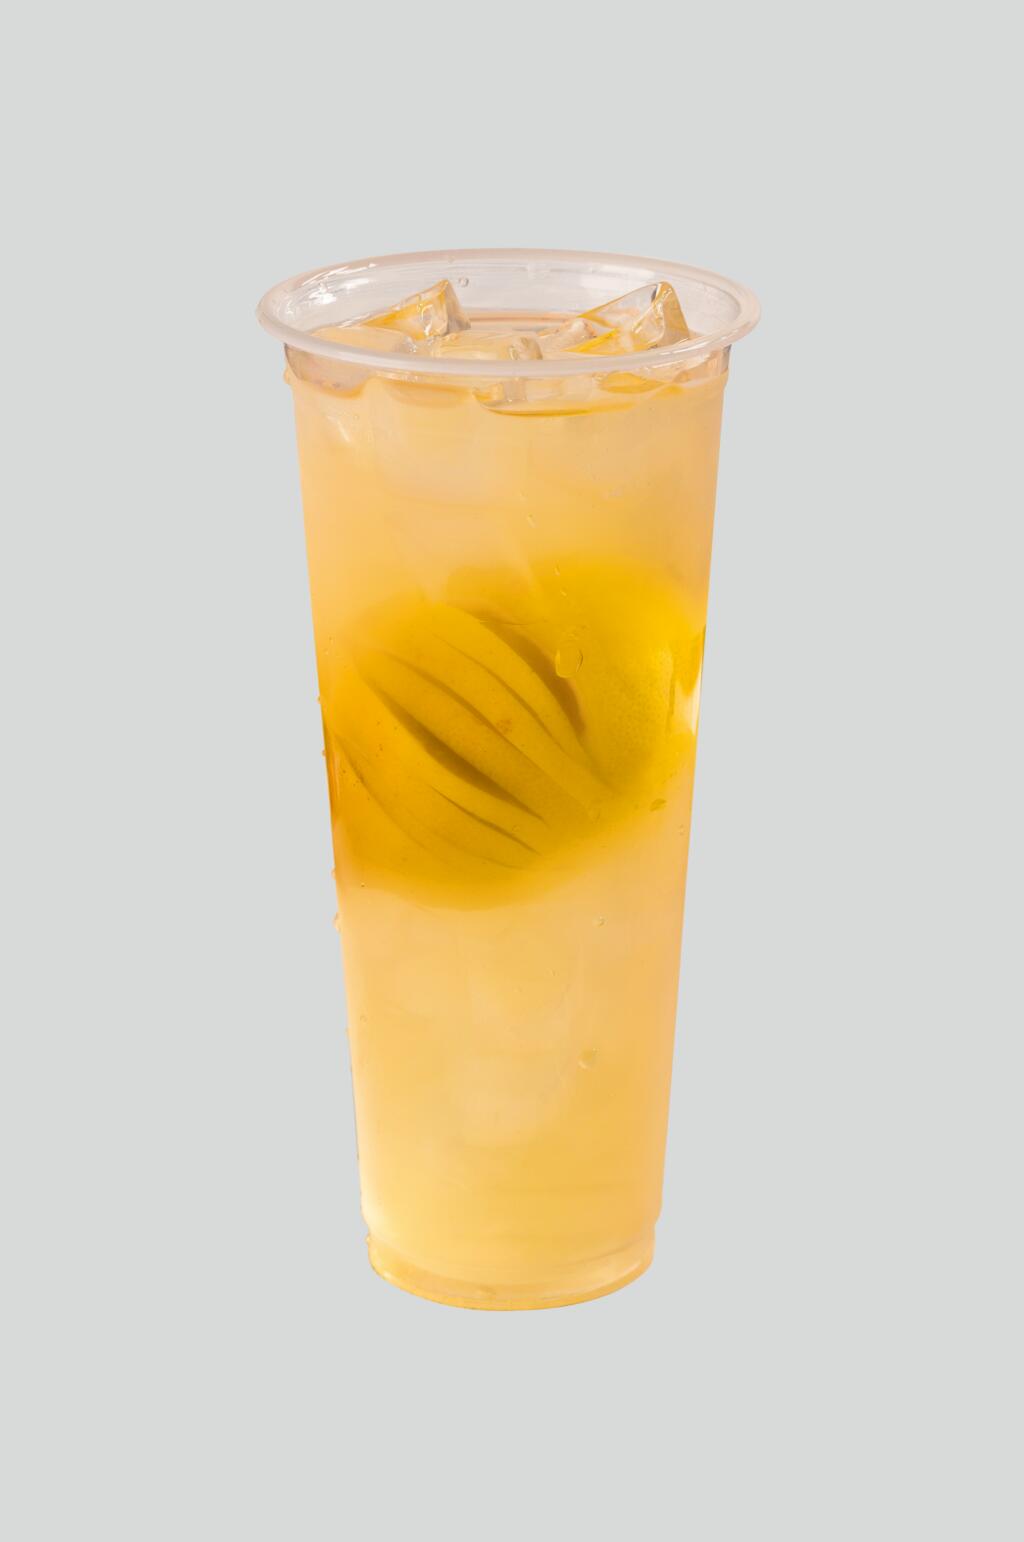 x蜂蜜柚子茶饮品摄影图